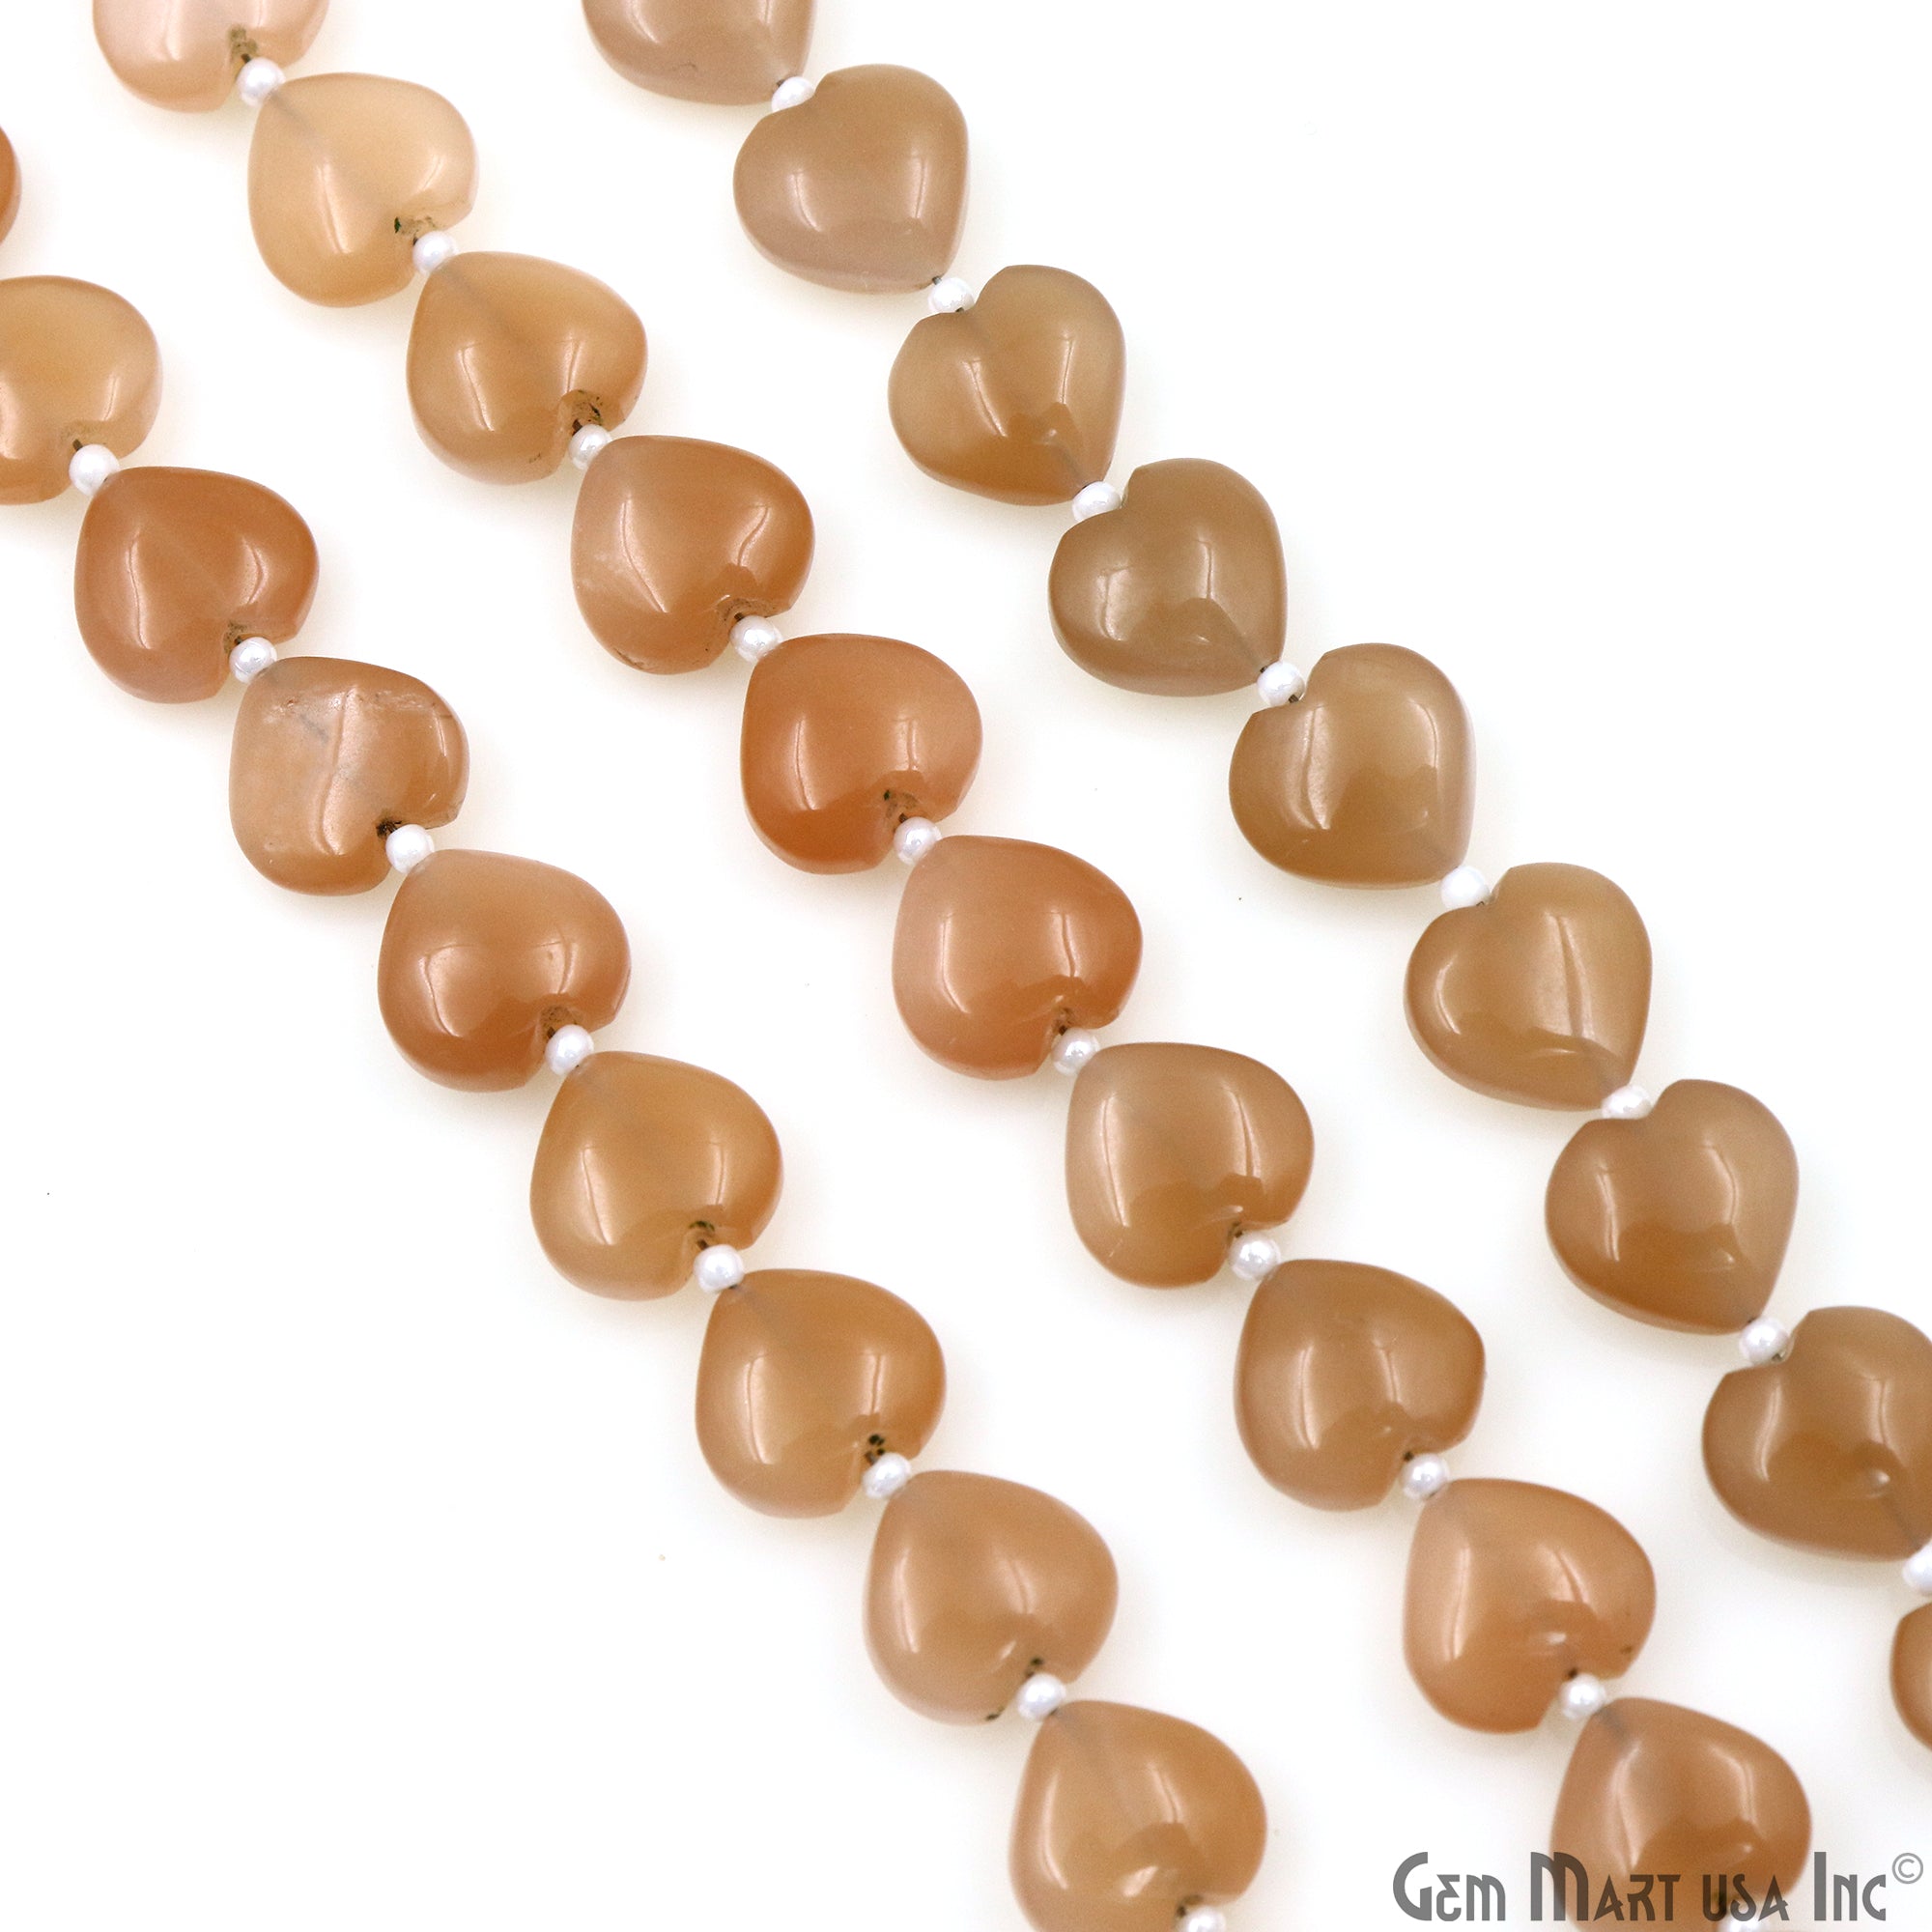 Peach Moonstone Heart Shape Cabochon Beads 10mm Gemstone 7 Inch Strands Briolette Drops